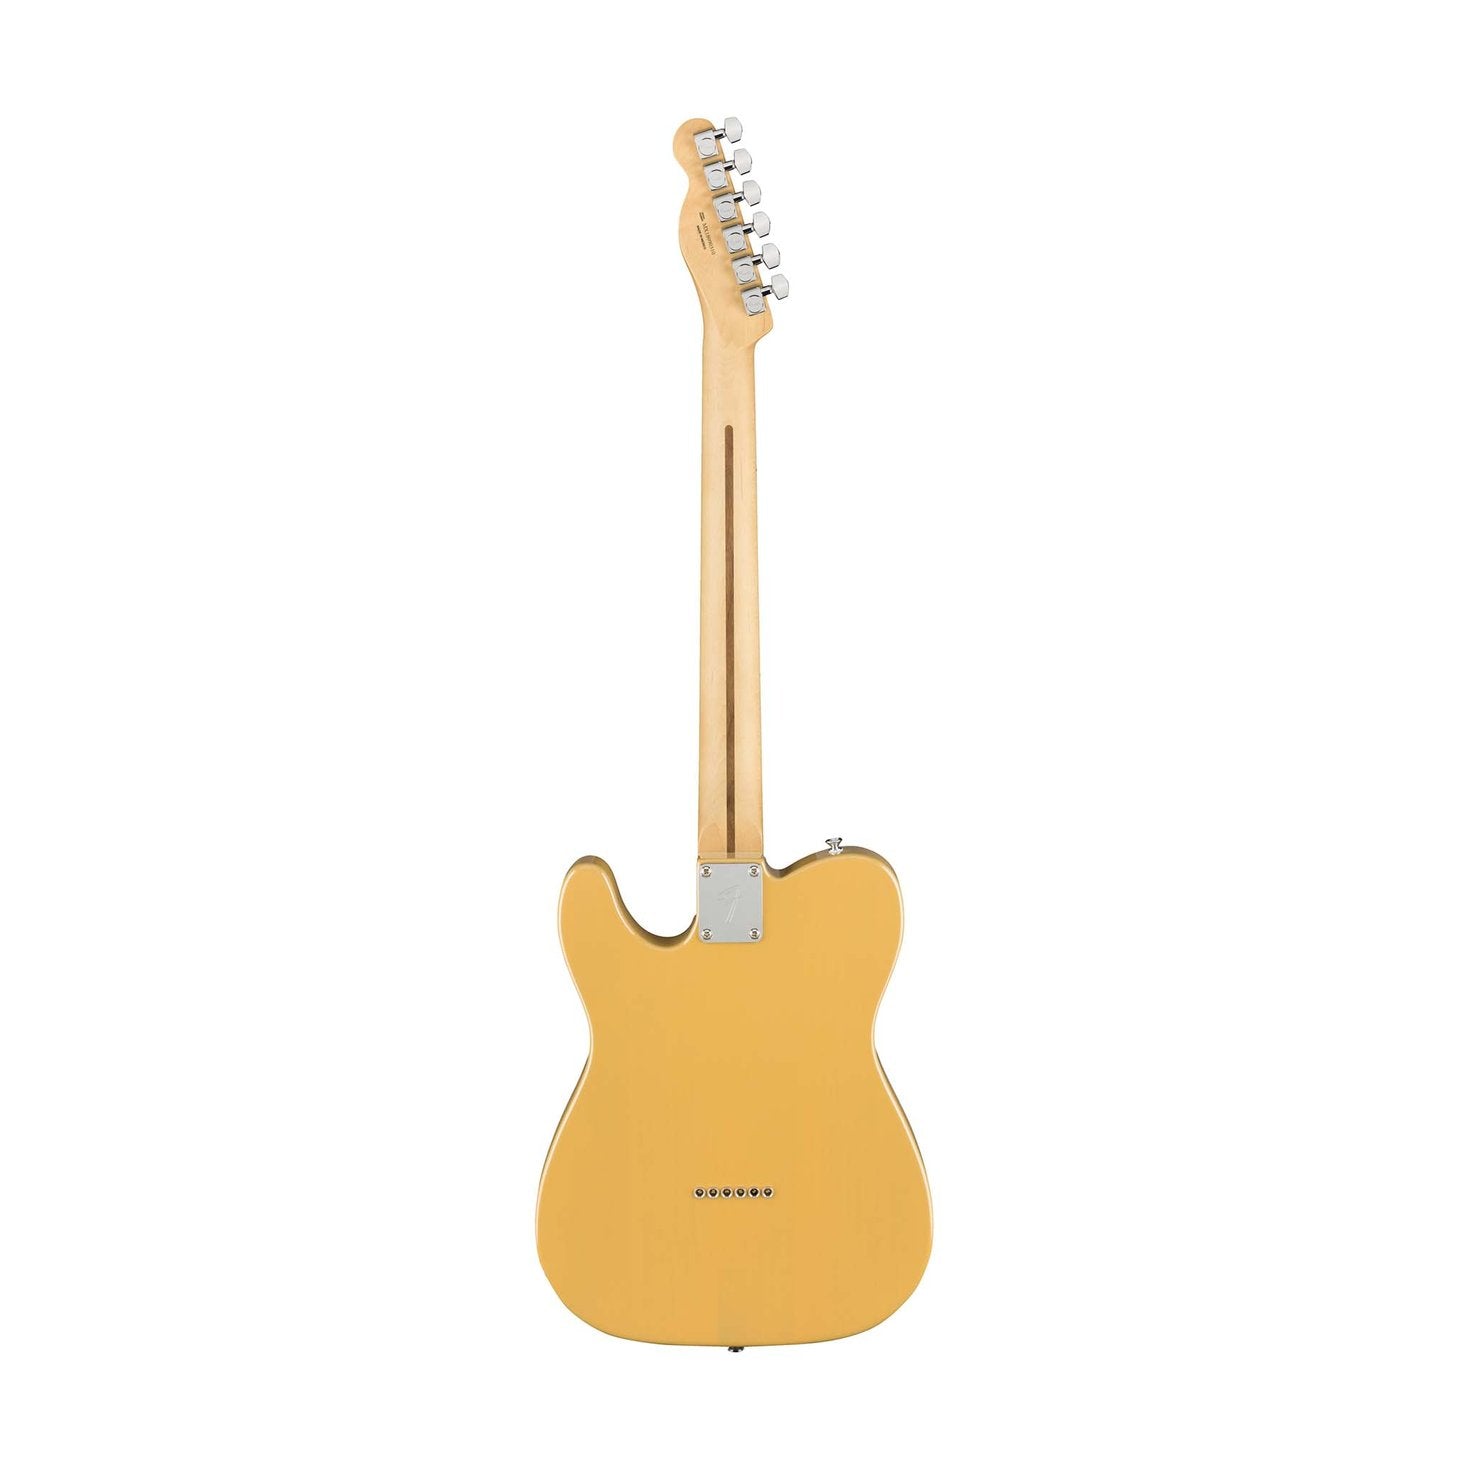 Fender Player Telecaster Electric Guitar, Maple FB, Butterscotch Blonde, FENDER, ELECTRIC GUITAR, fender-eletric-guitar-f03-014-5212-550, ZOSO MUSIC SDN BHD